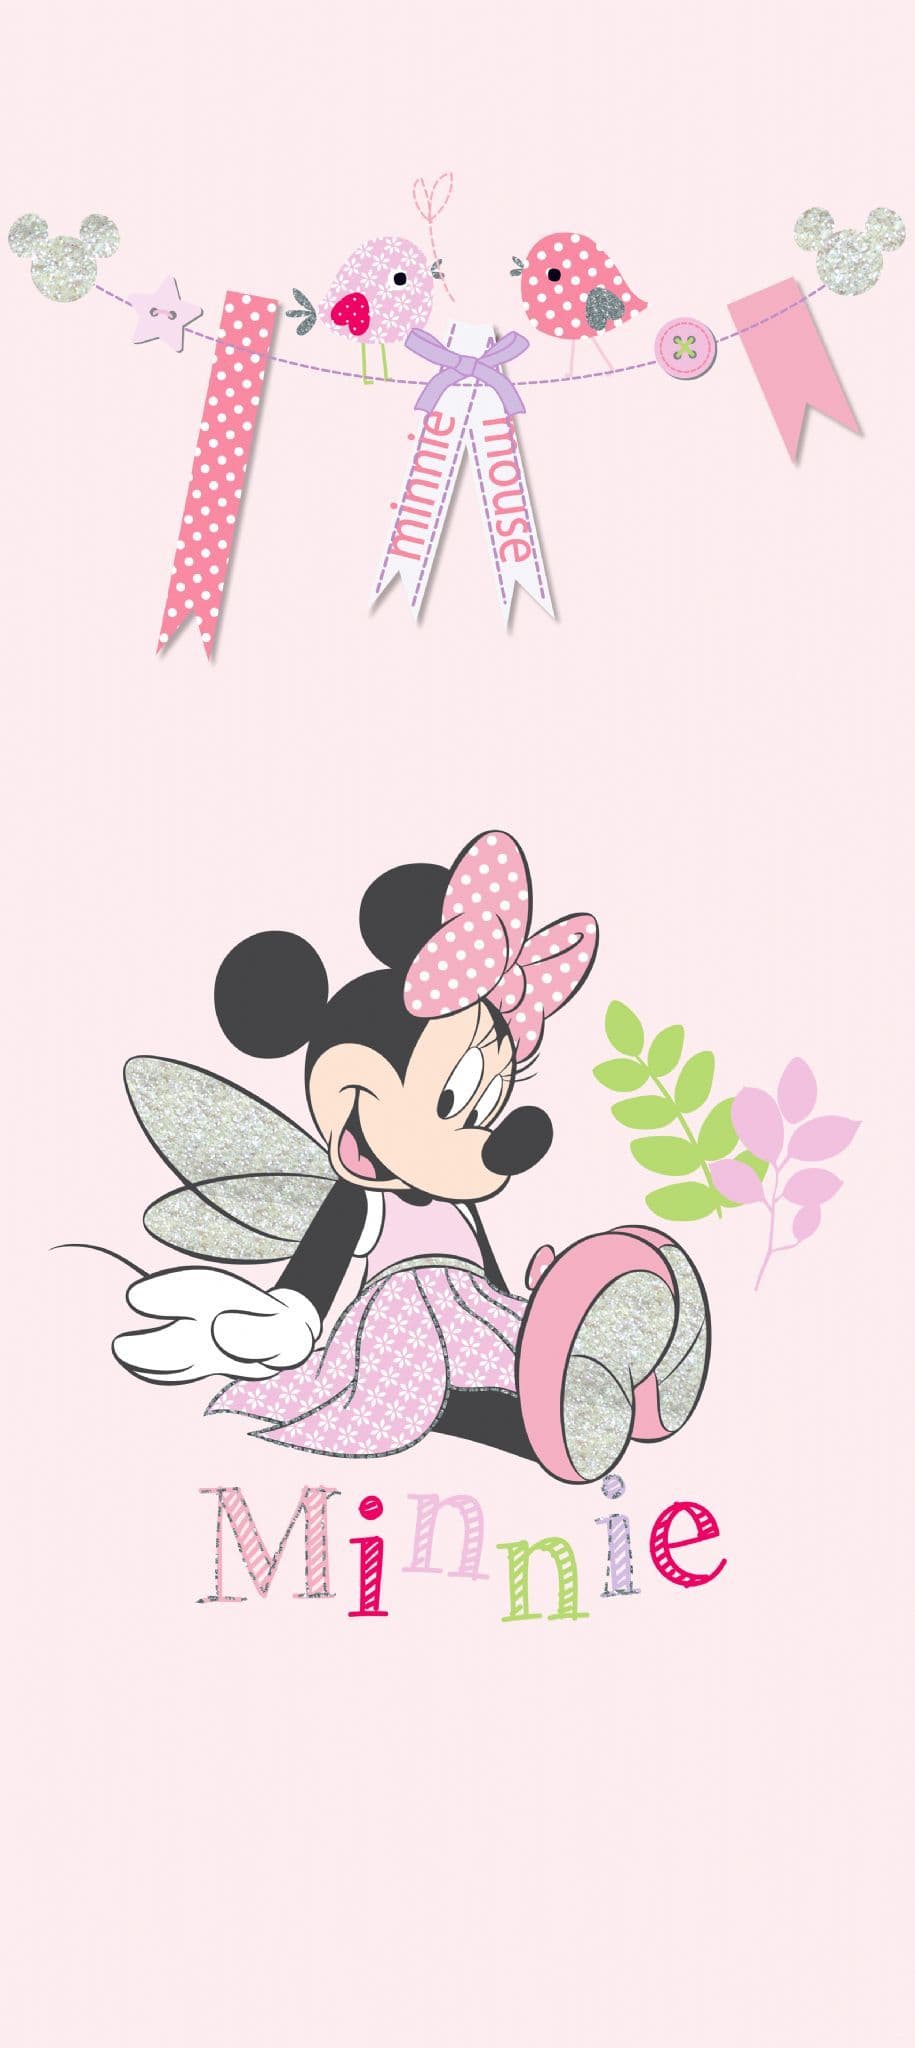  Minnie Mouse Hintergrundbild 915x2048. Disney Minnie Mouse Premium wall murals. Buy it now